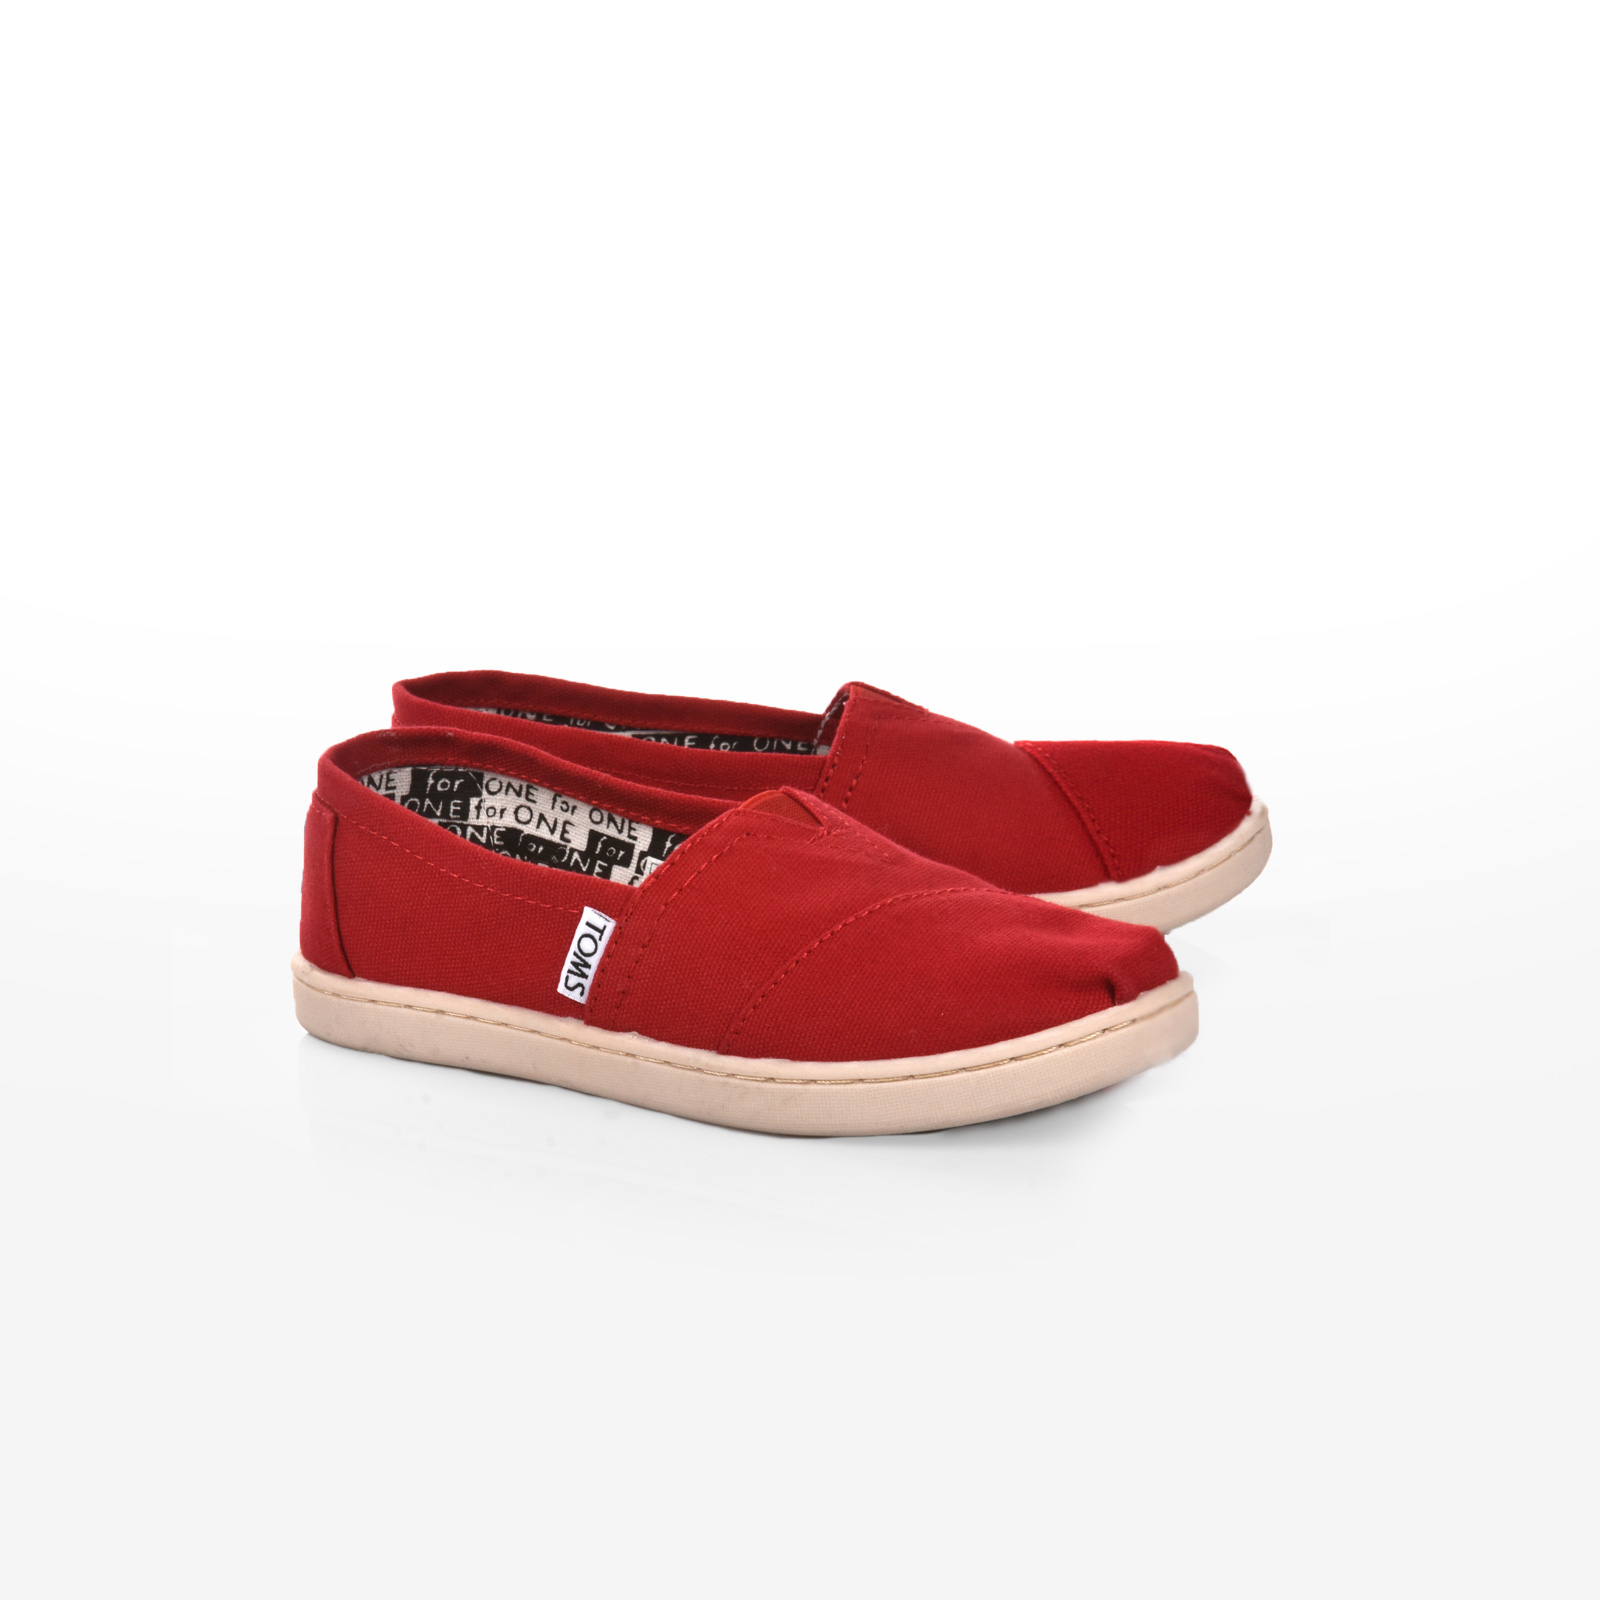 Toms - NATURAL CANVAS - RED Παιδικά > Παπούτσια > Εσπαντρίγιες > Flat